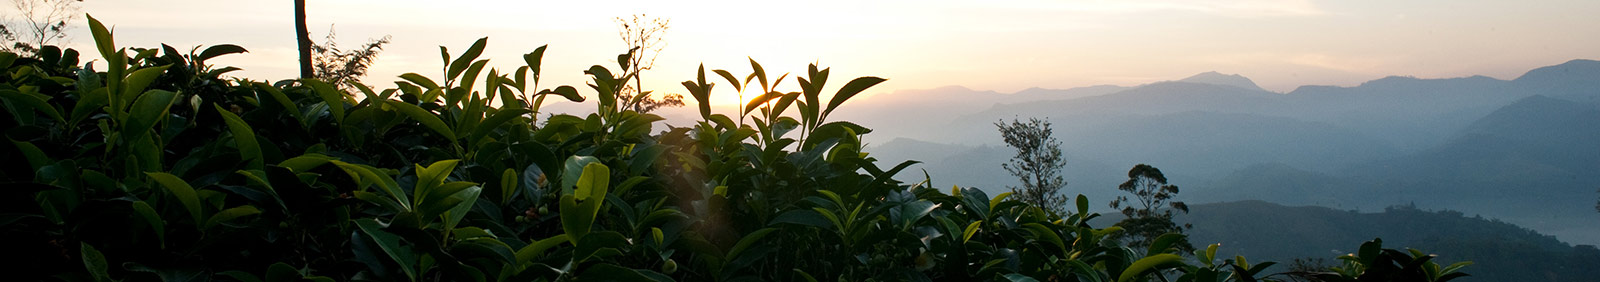 Tea Field In Sri Lanka